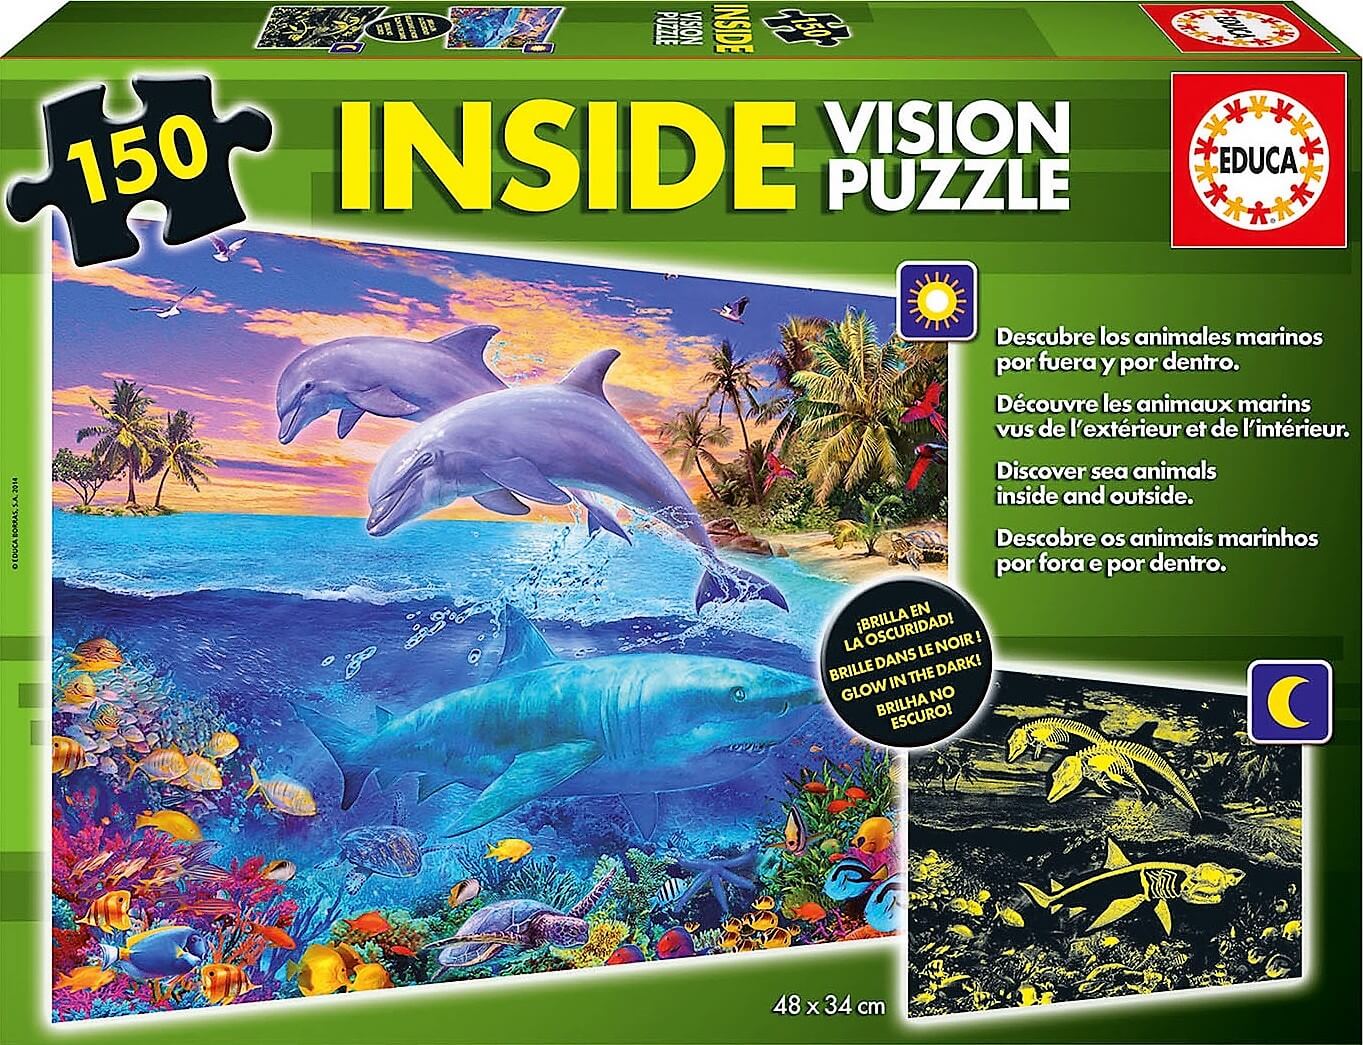 150 Inside Vision Mundo submarino